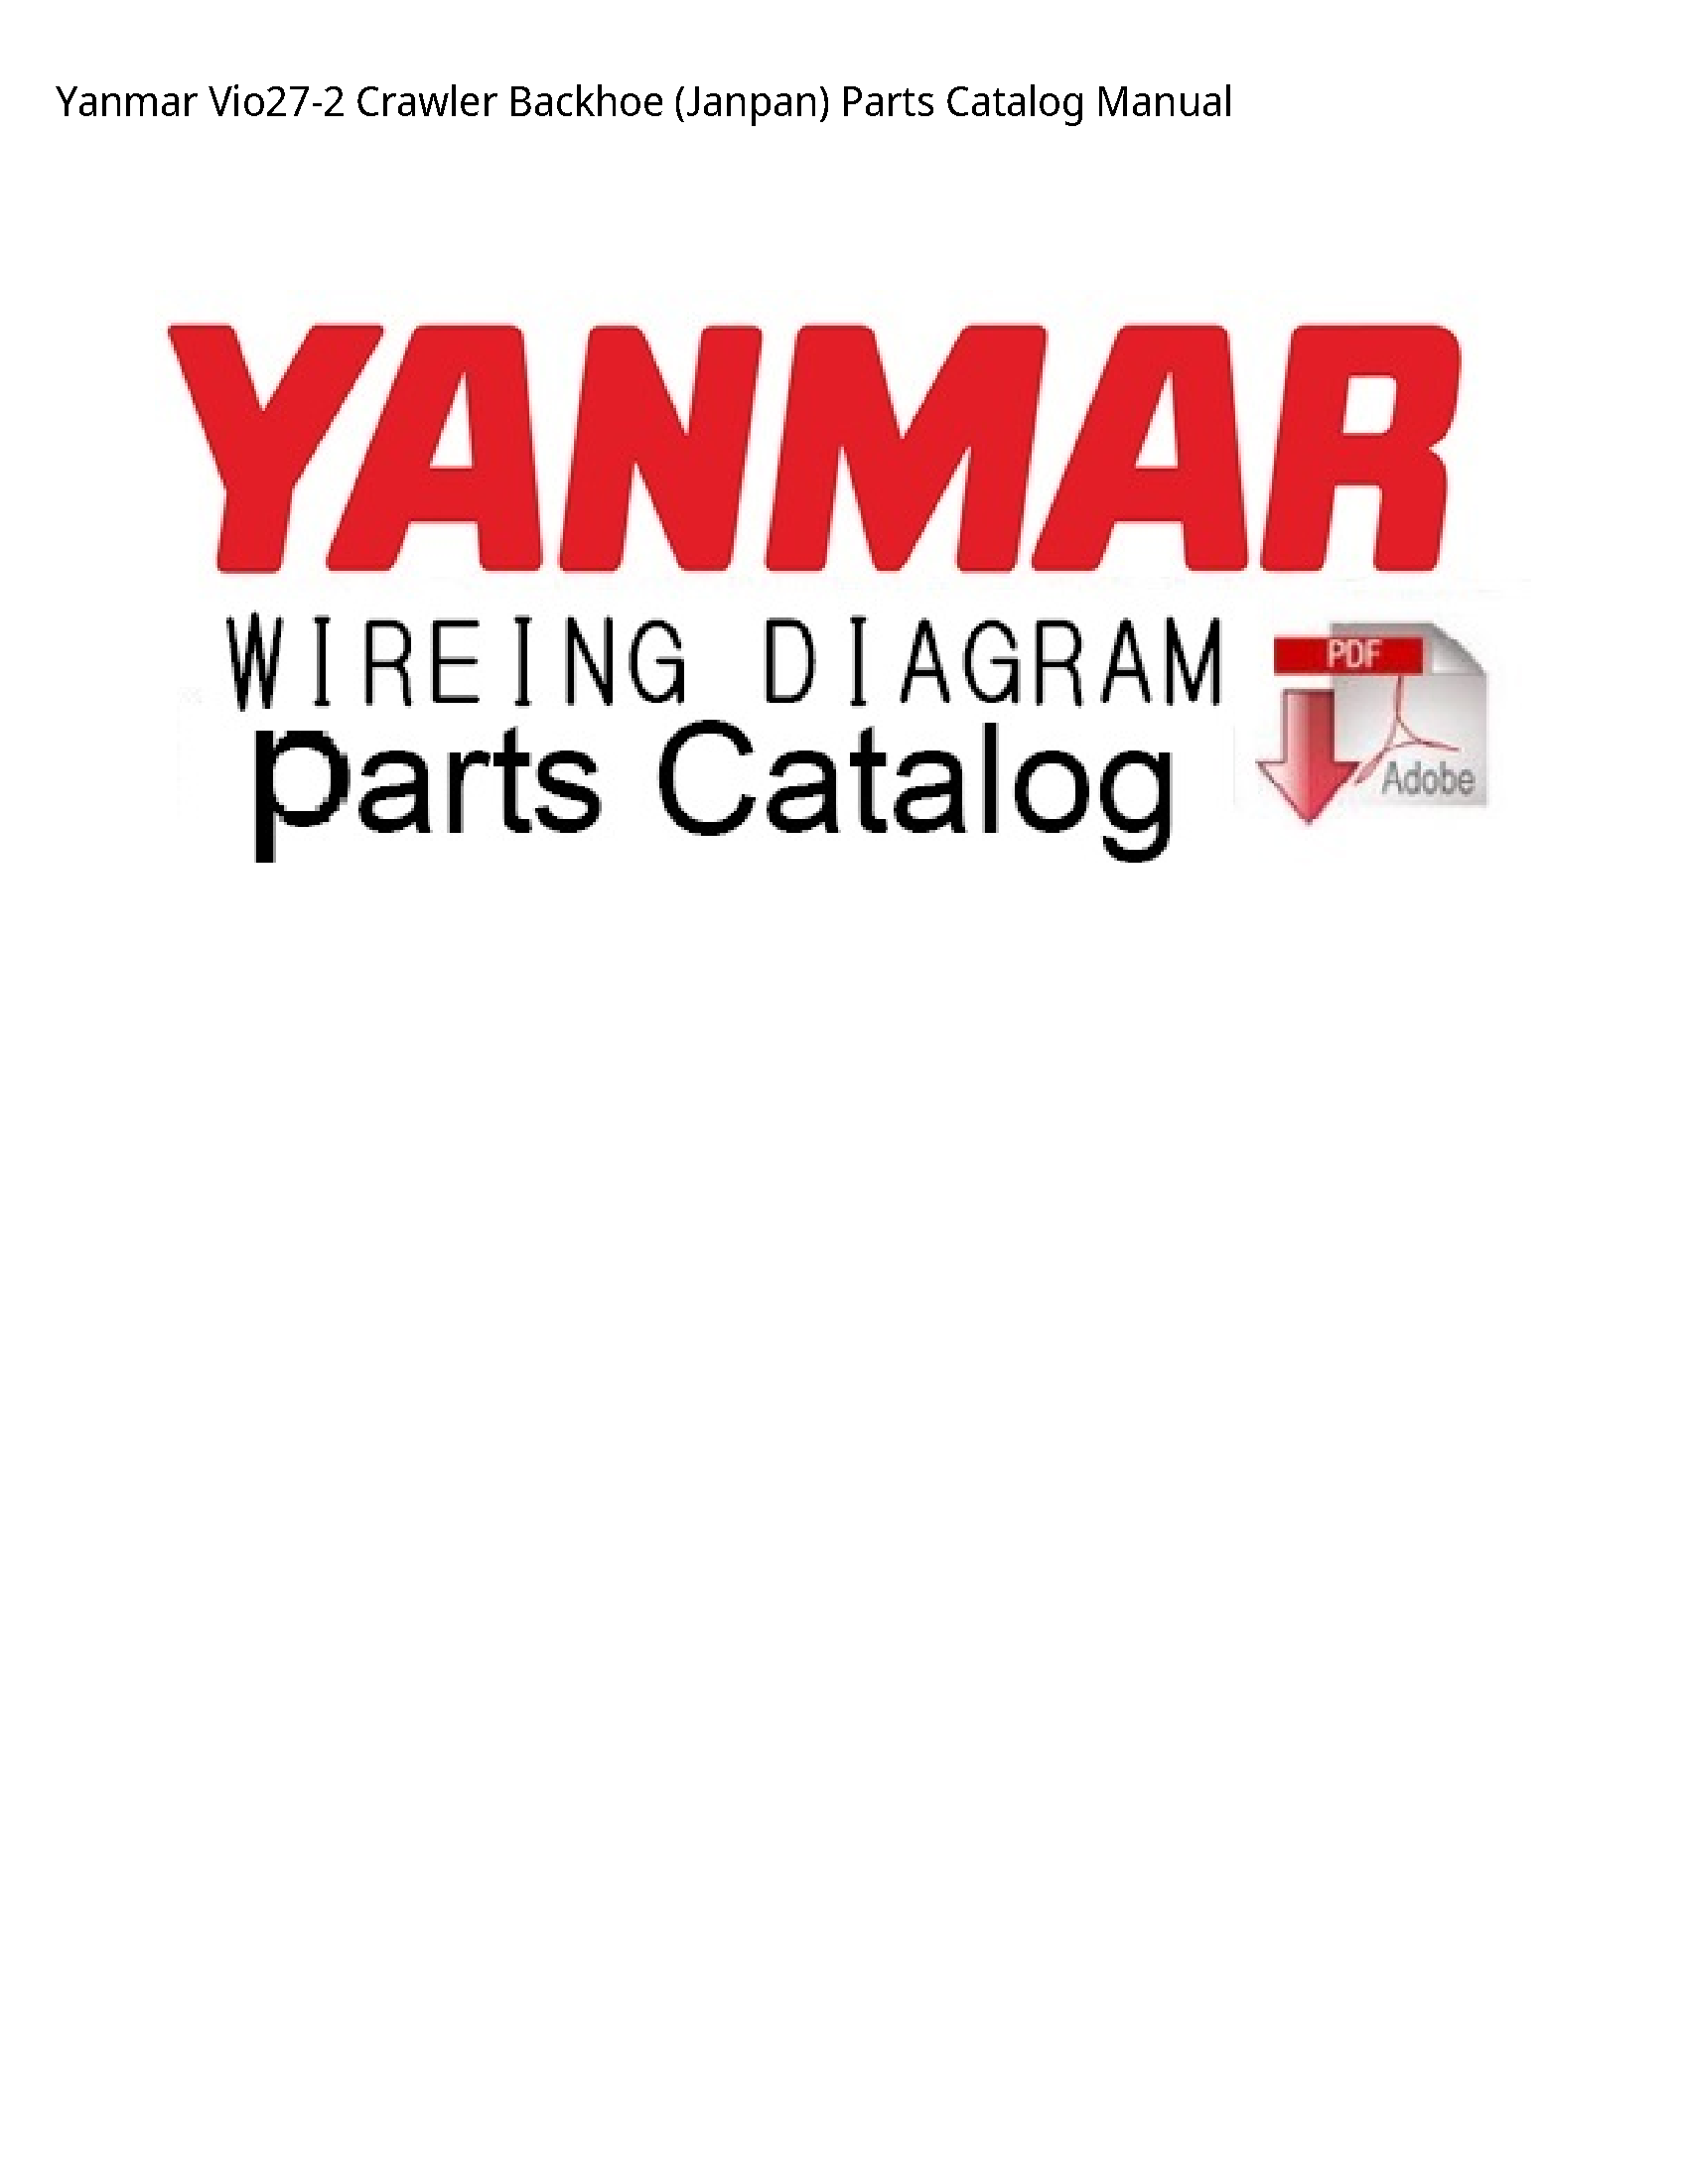 Yanmar Vio27-2 Crawler Backhoe (Janpan) Parts Catalog manual